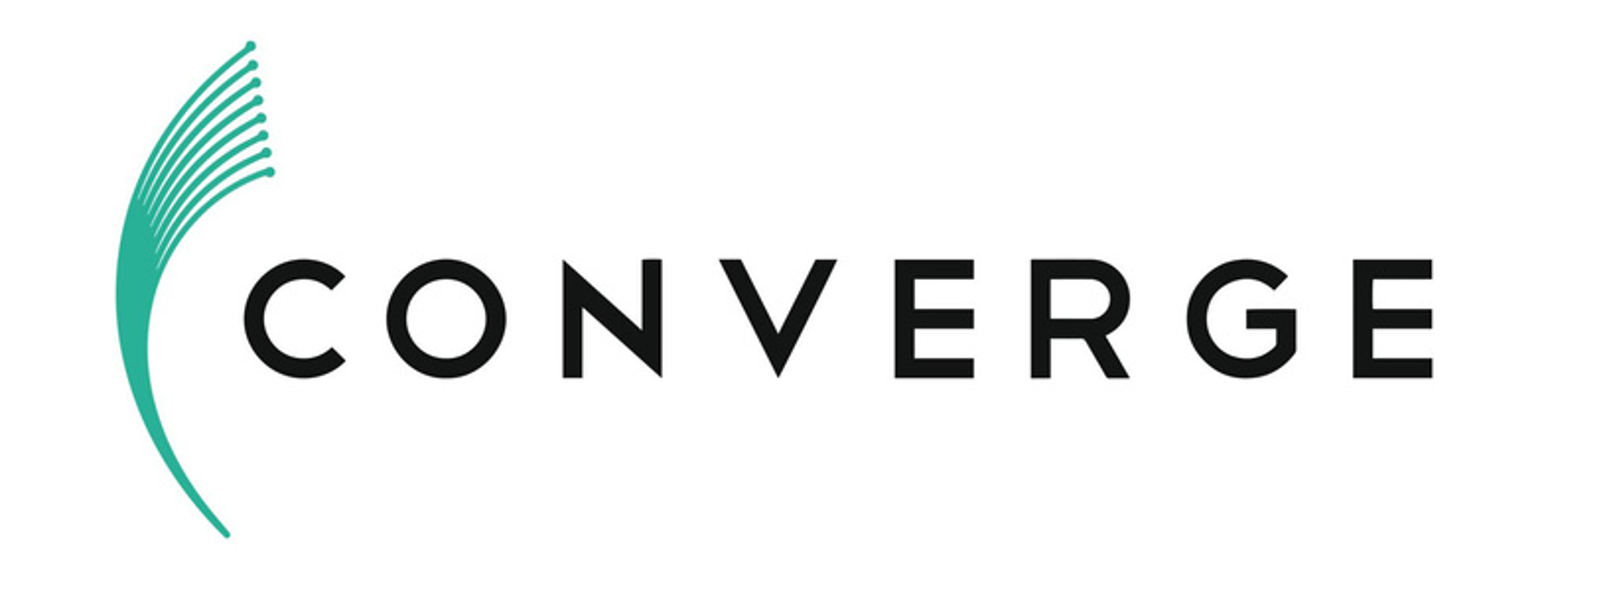 Converge logo